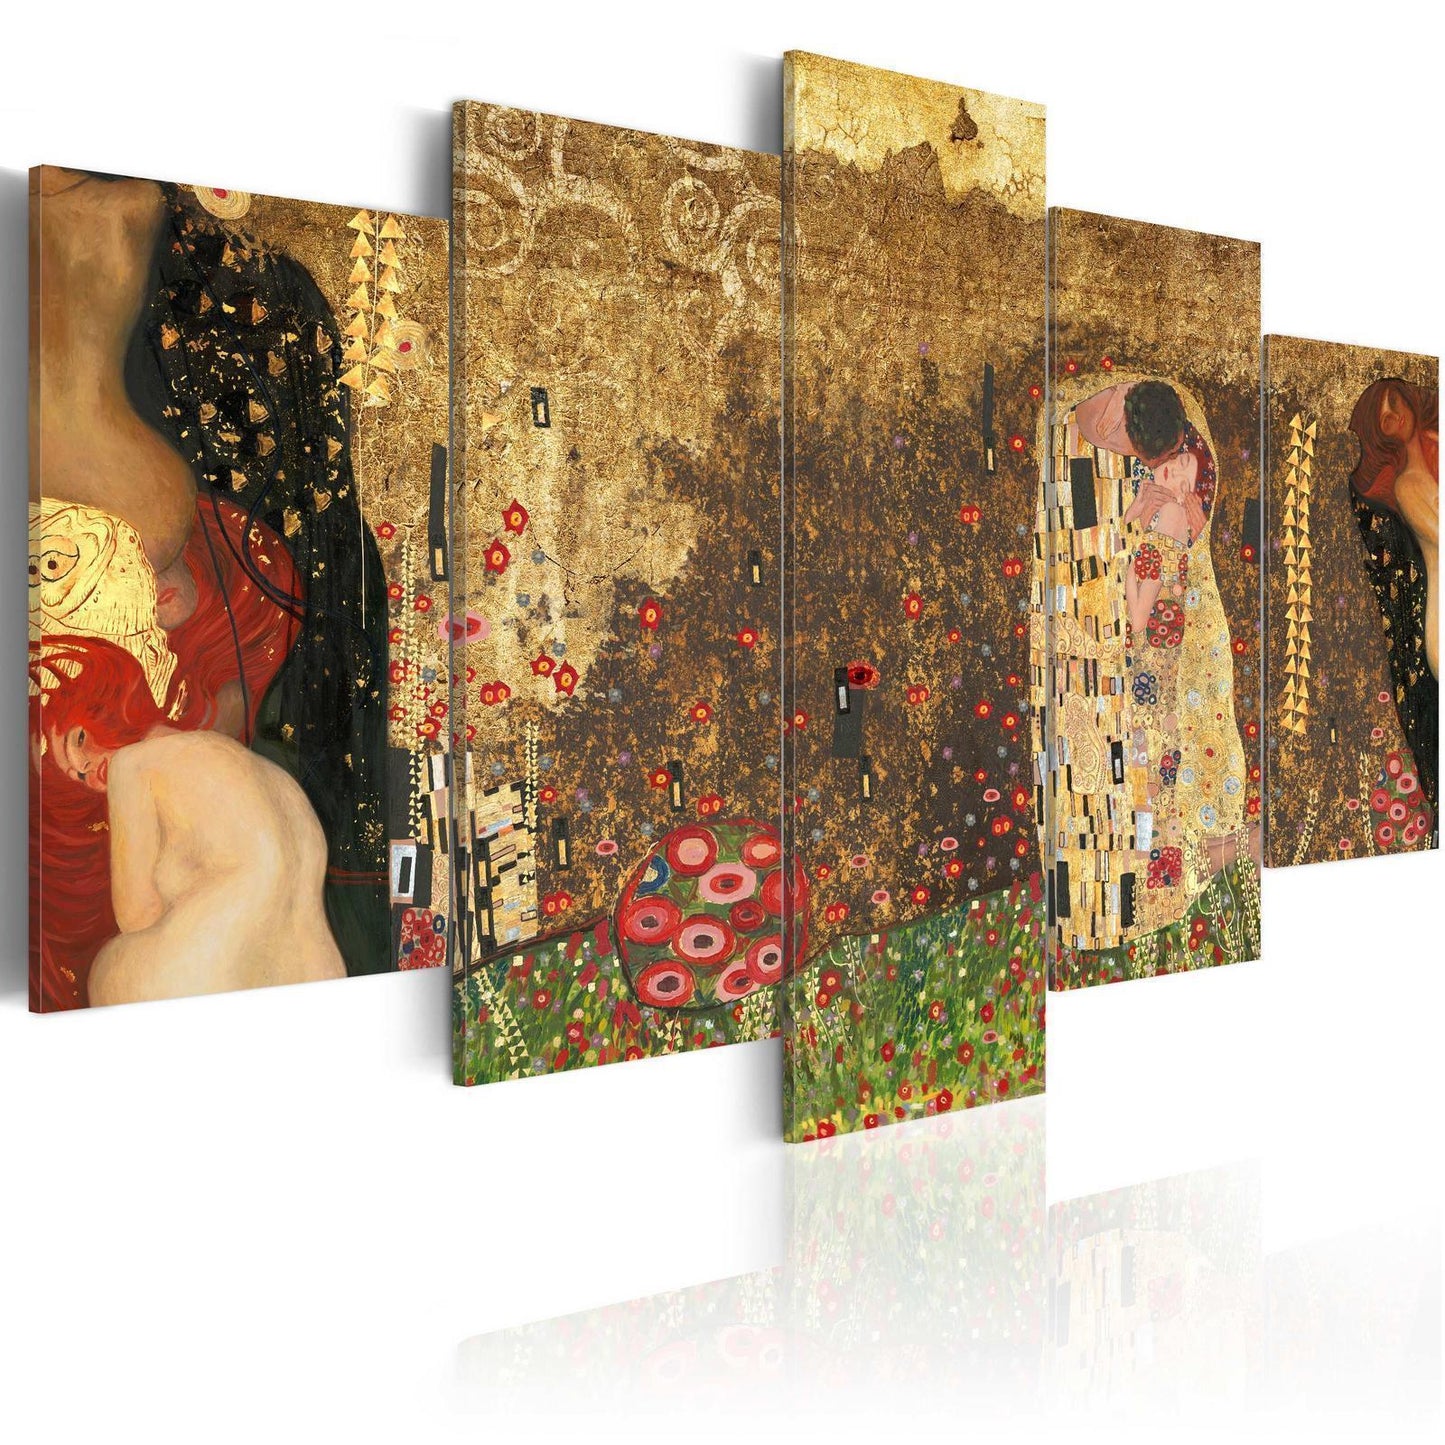 Painting - Klimt's muses